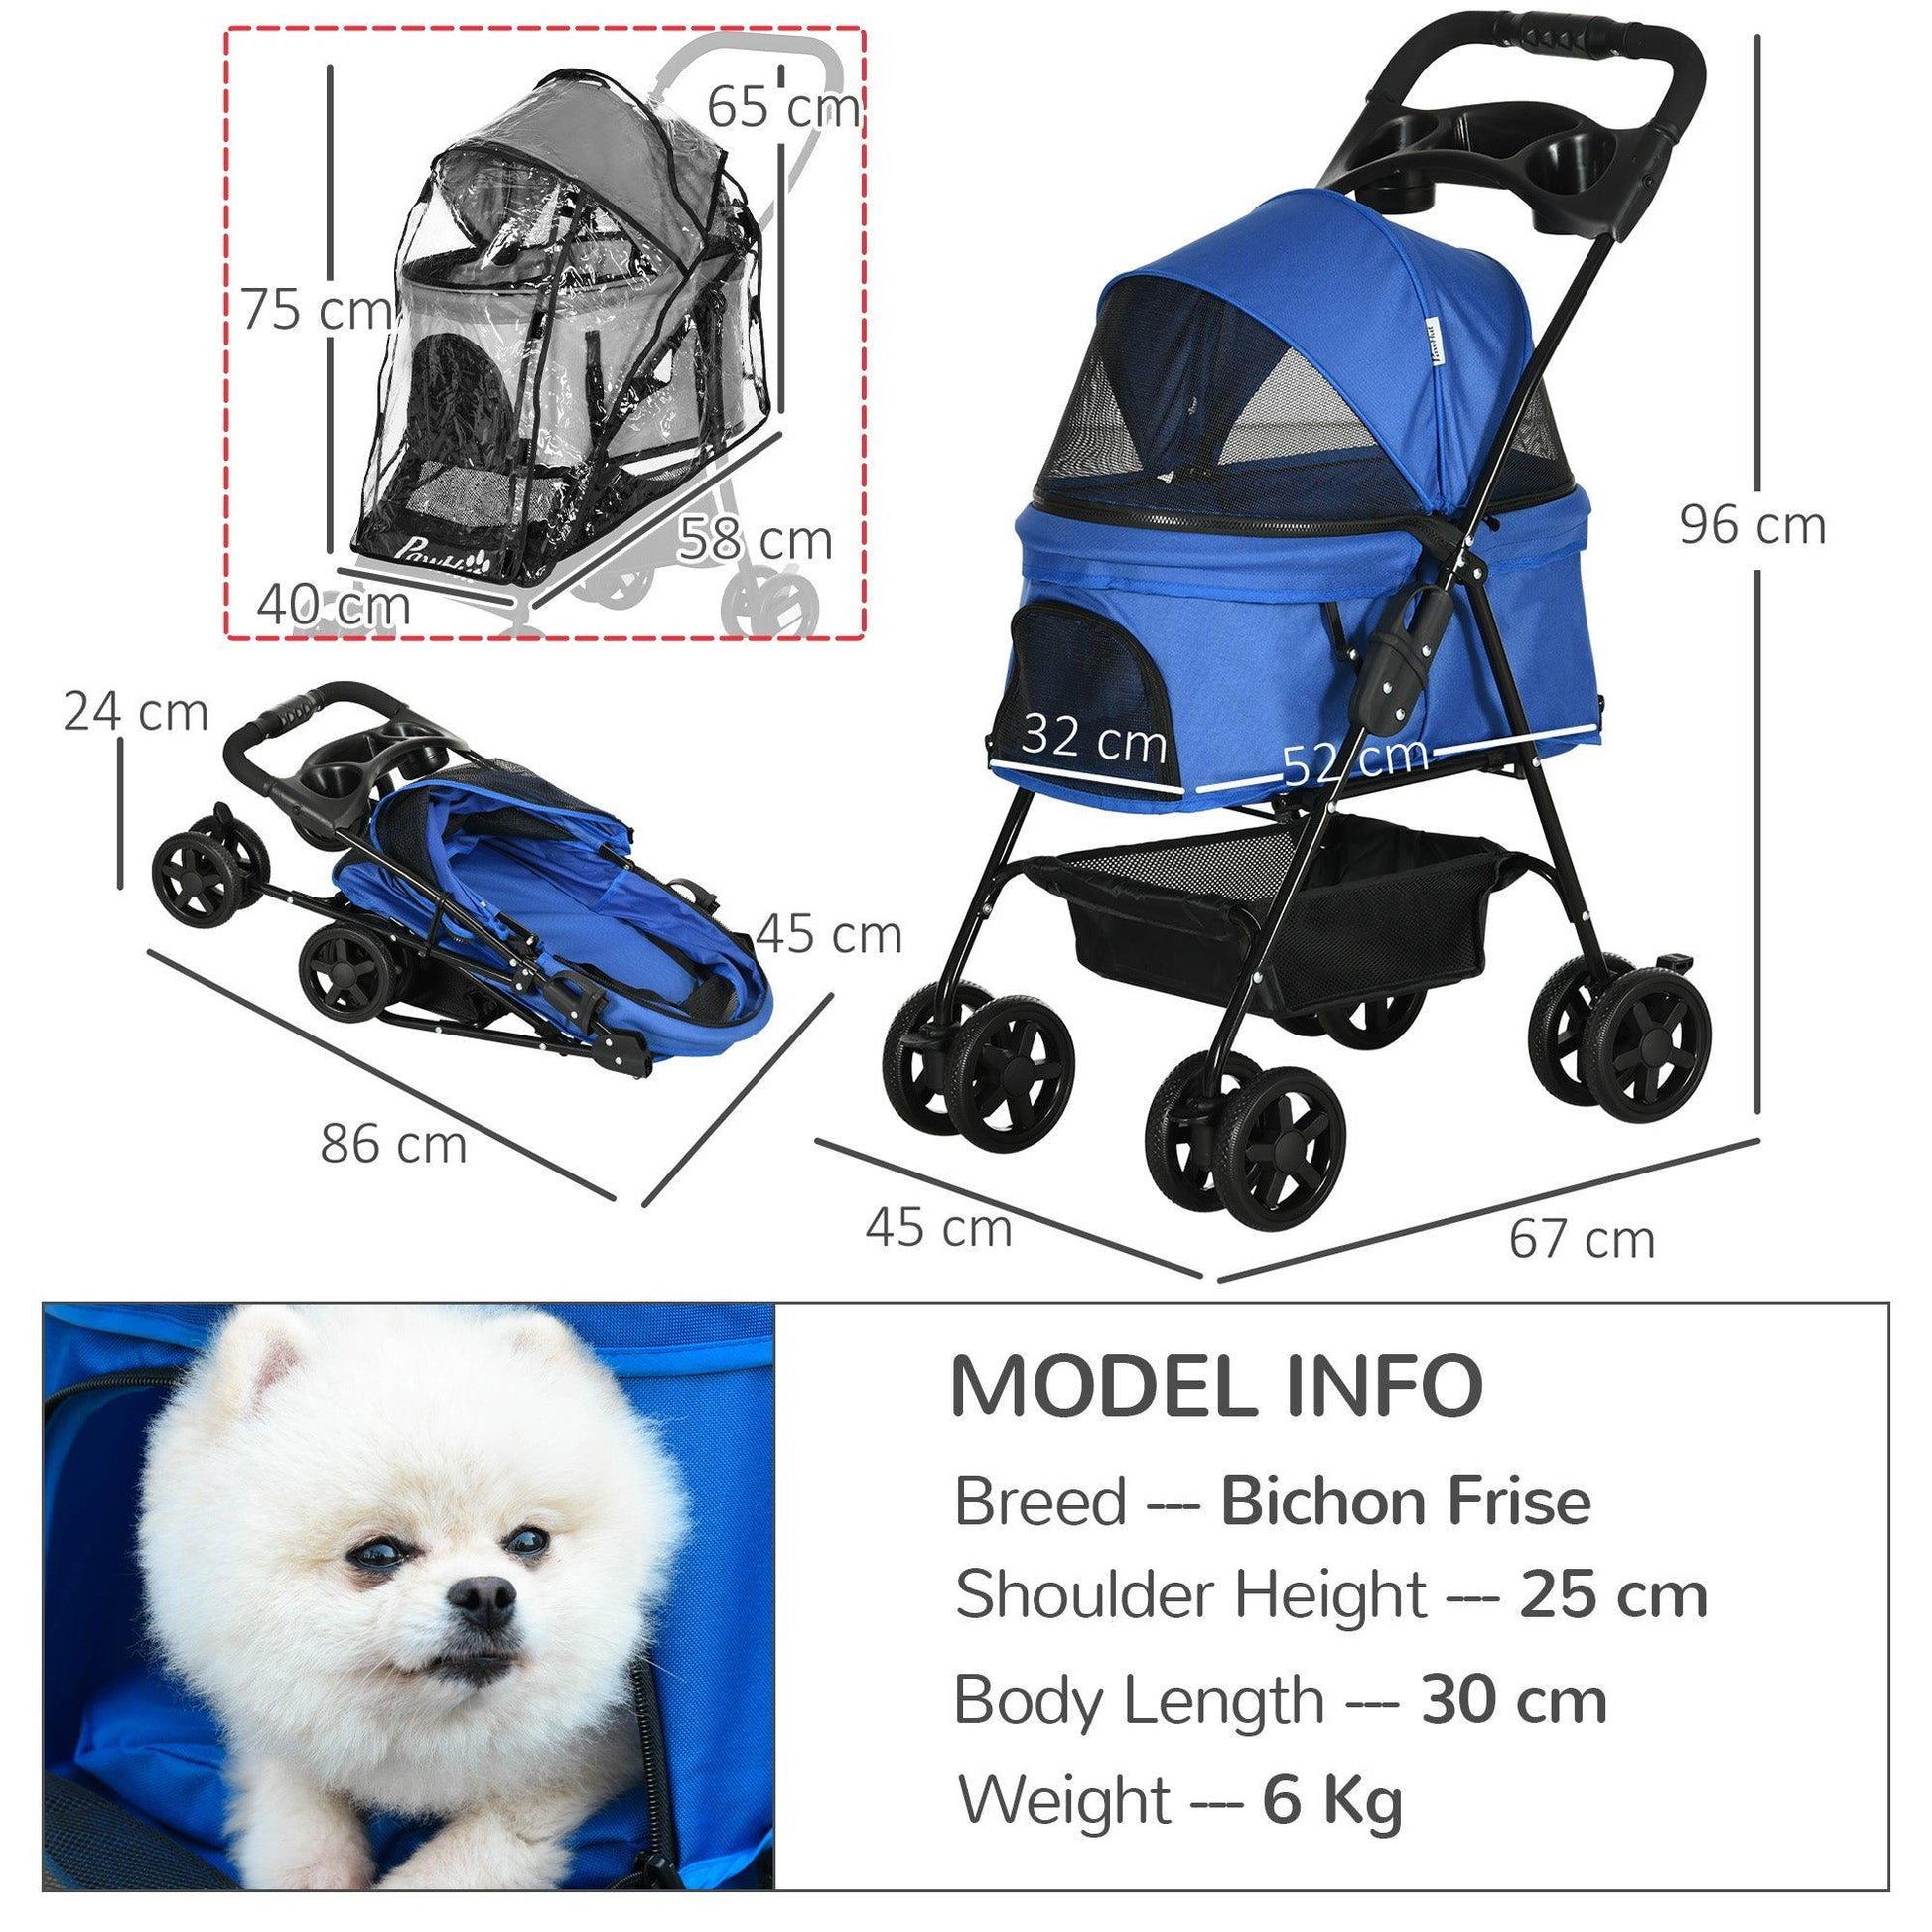 PawHut Dog Stroller with Rain Cover, Blue - ALL4U RETAILER LTD